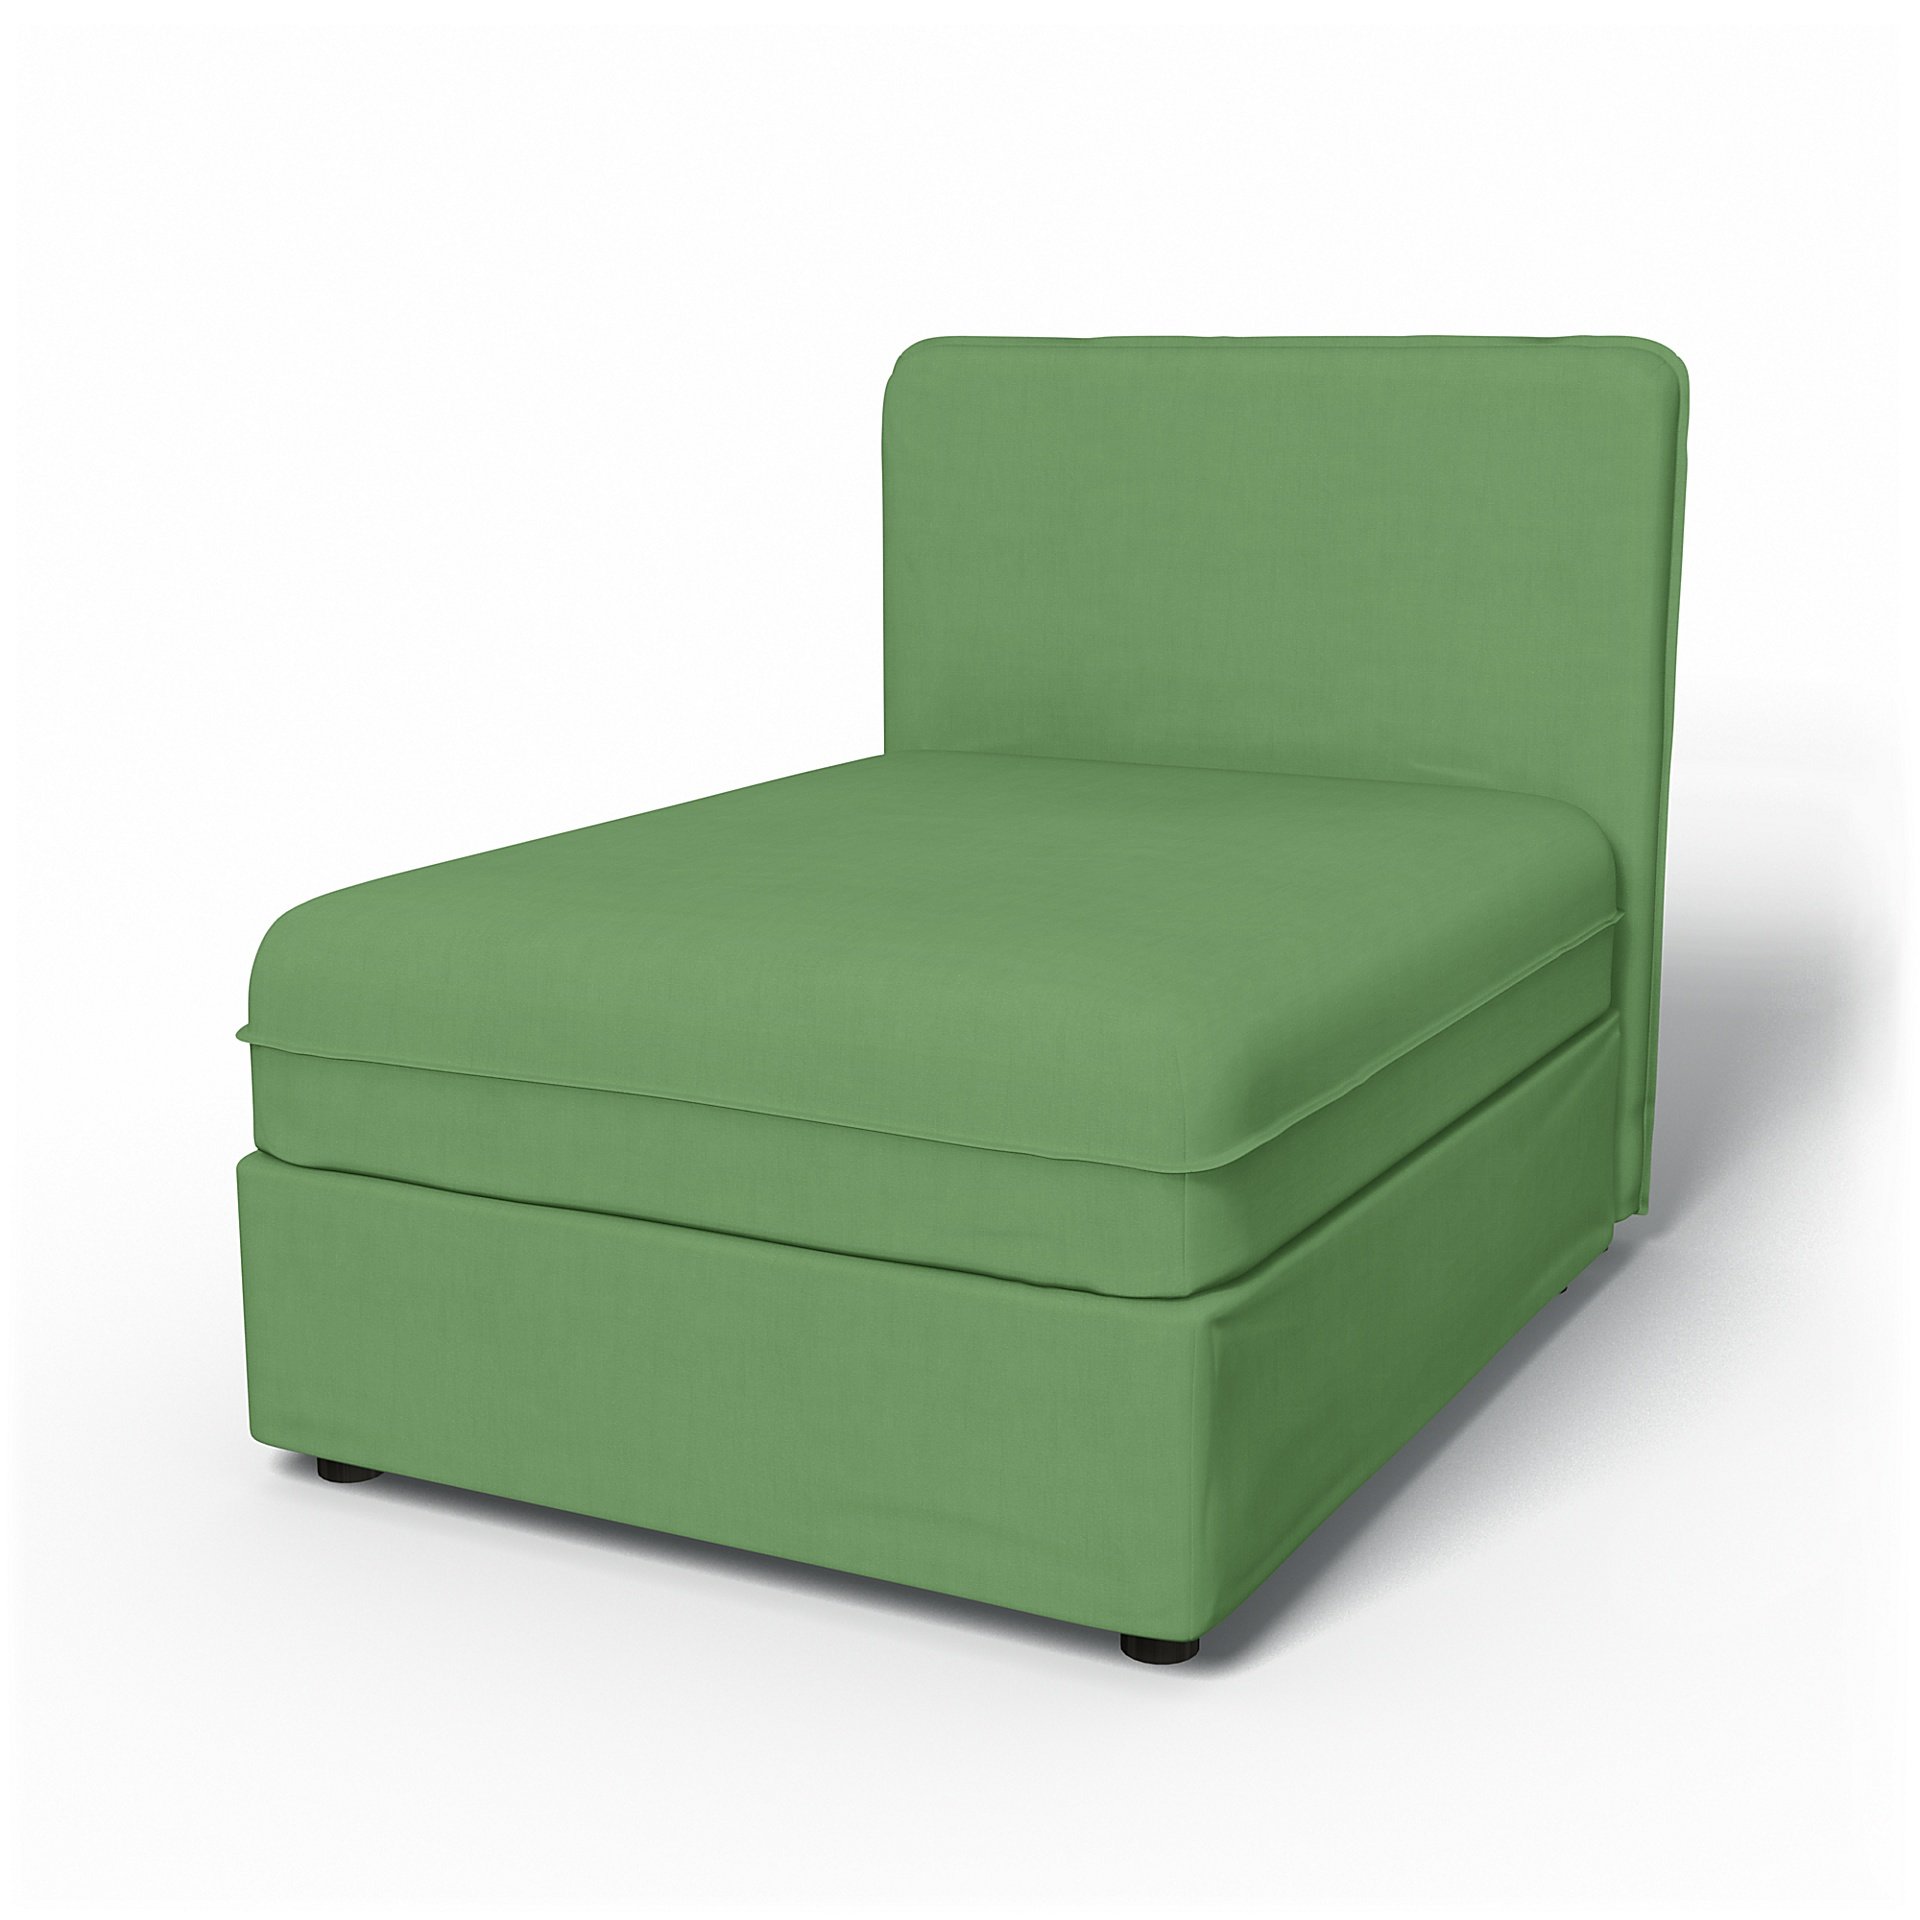 IKEA - Vallentuna Seat Module with Low Back Cover 80x100cm 32x39in, Apple Green, Linen - Bemz